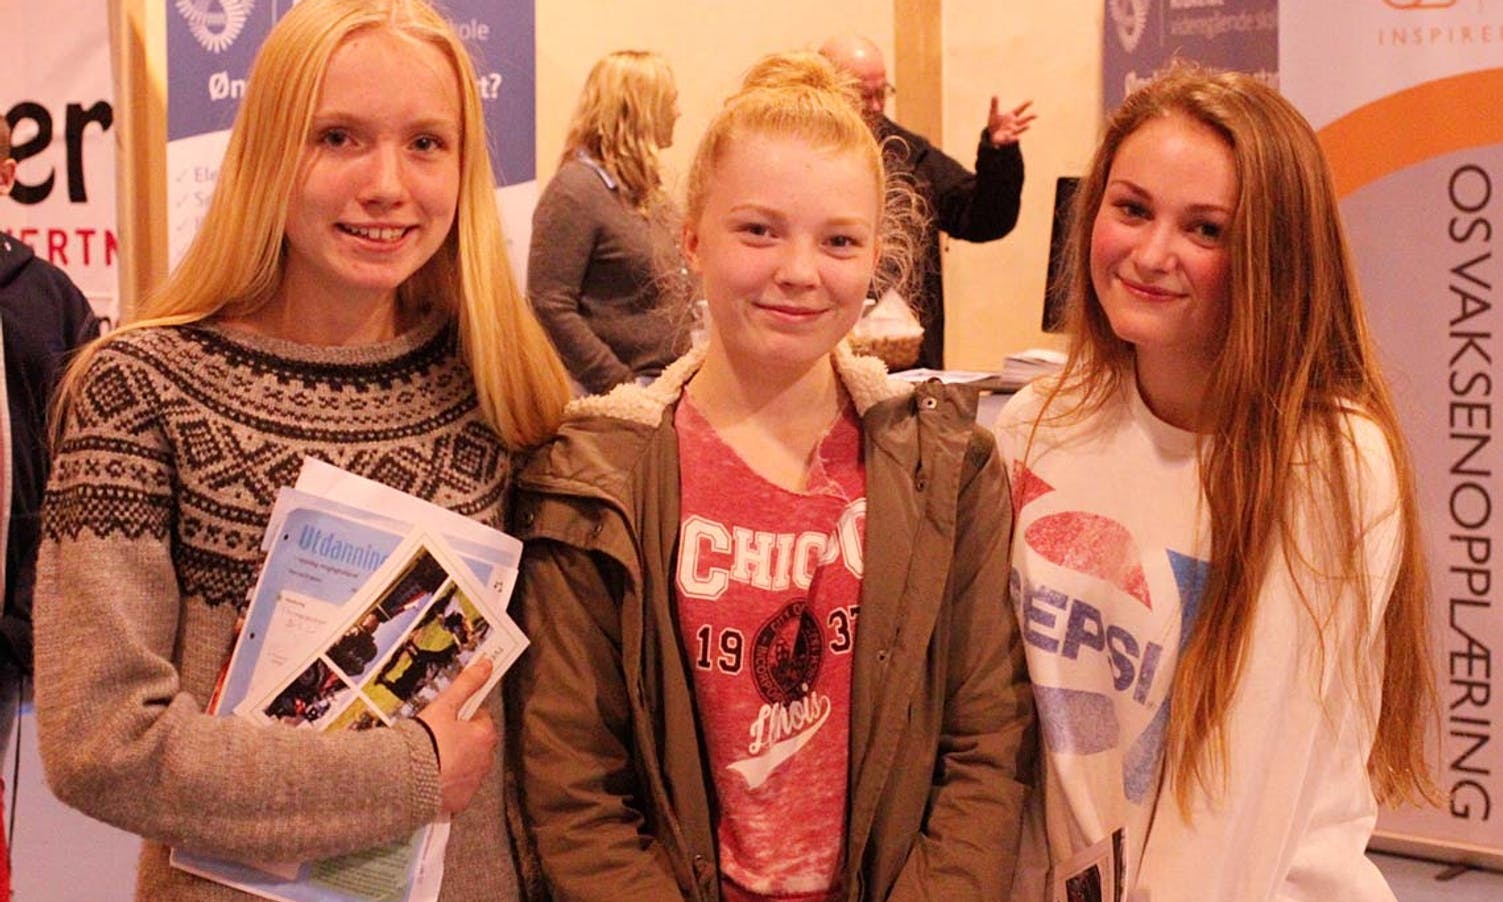 Josefine, Emma og Celina har fått blinka ut kva retning dei vil gå vidare på etter ungdomsskulen. (Foto: CV)